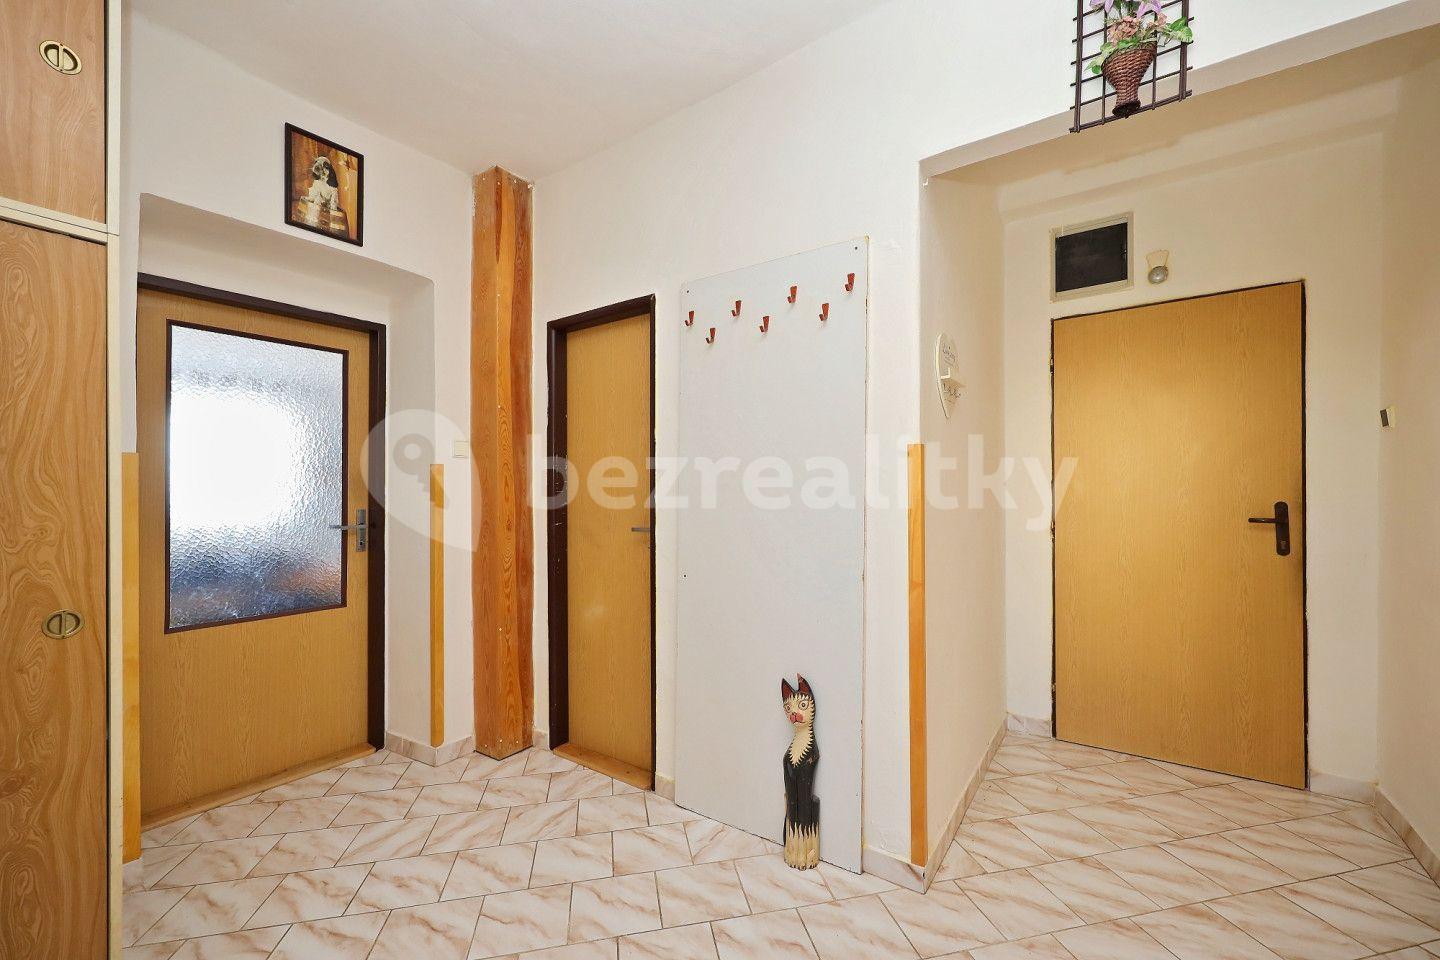 3 bedroom flat for sale, 100 m², Valečov, Okrouhlice, Vysočina Region